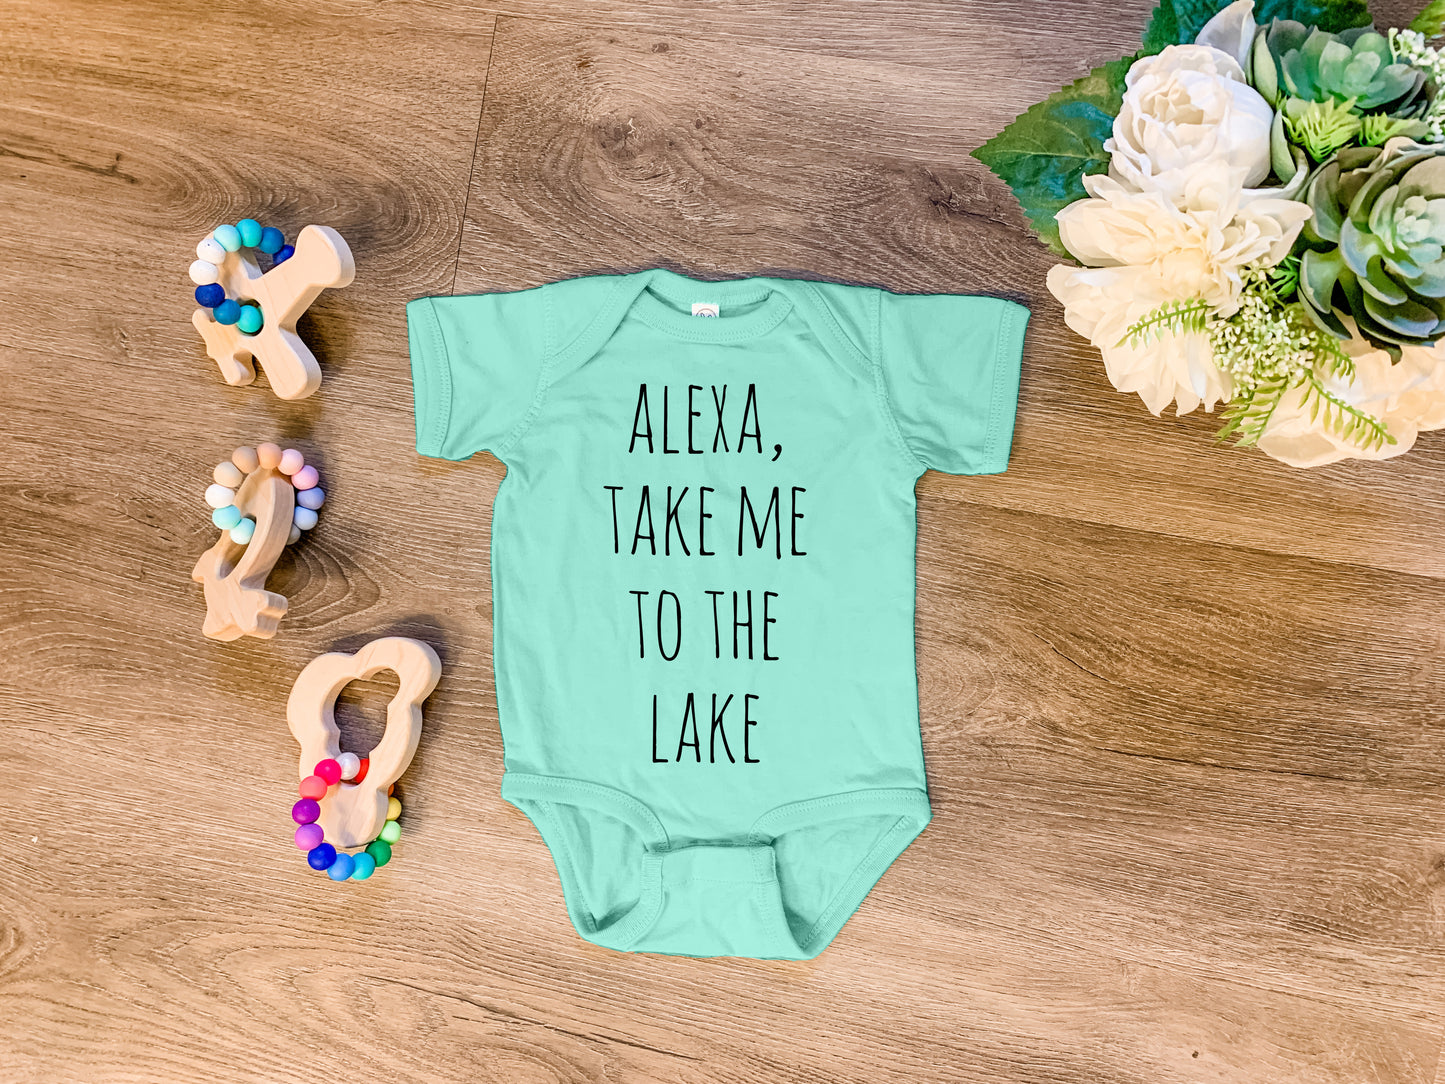 Alexa, Take Me To The Lake - Onesie - Heather Gray, Chill, or Lavender